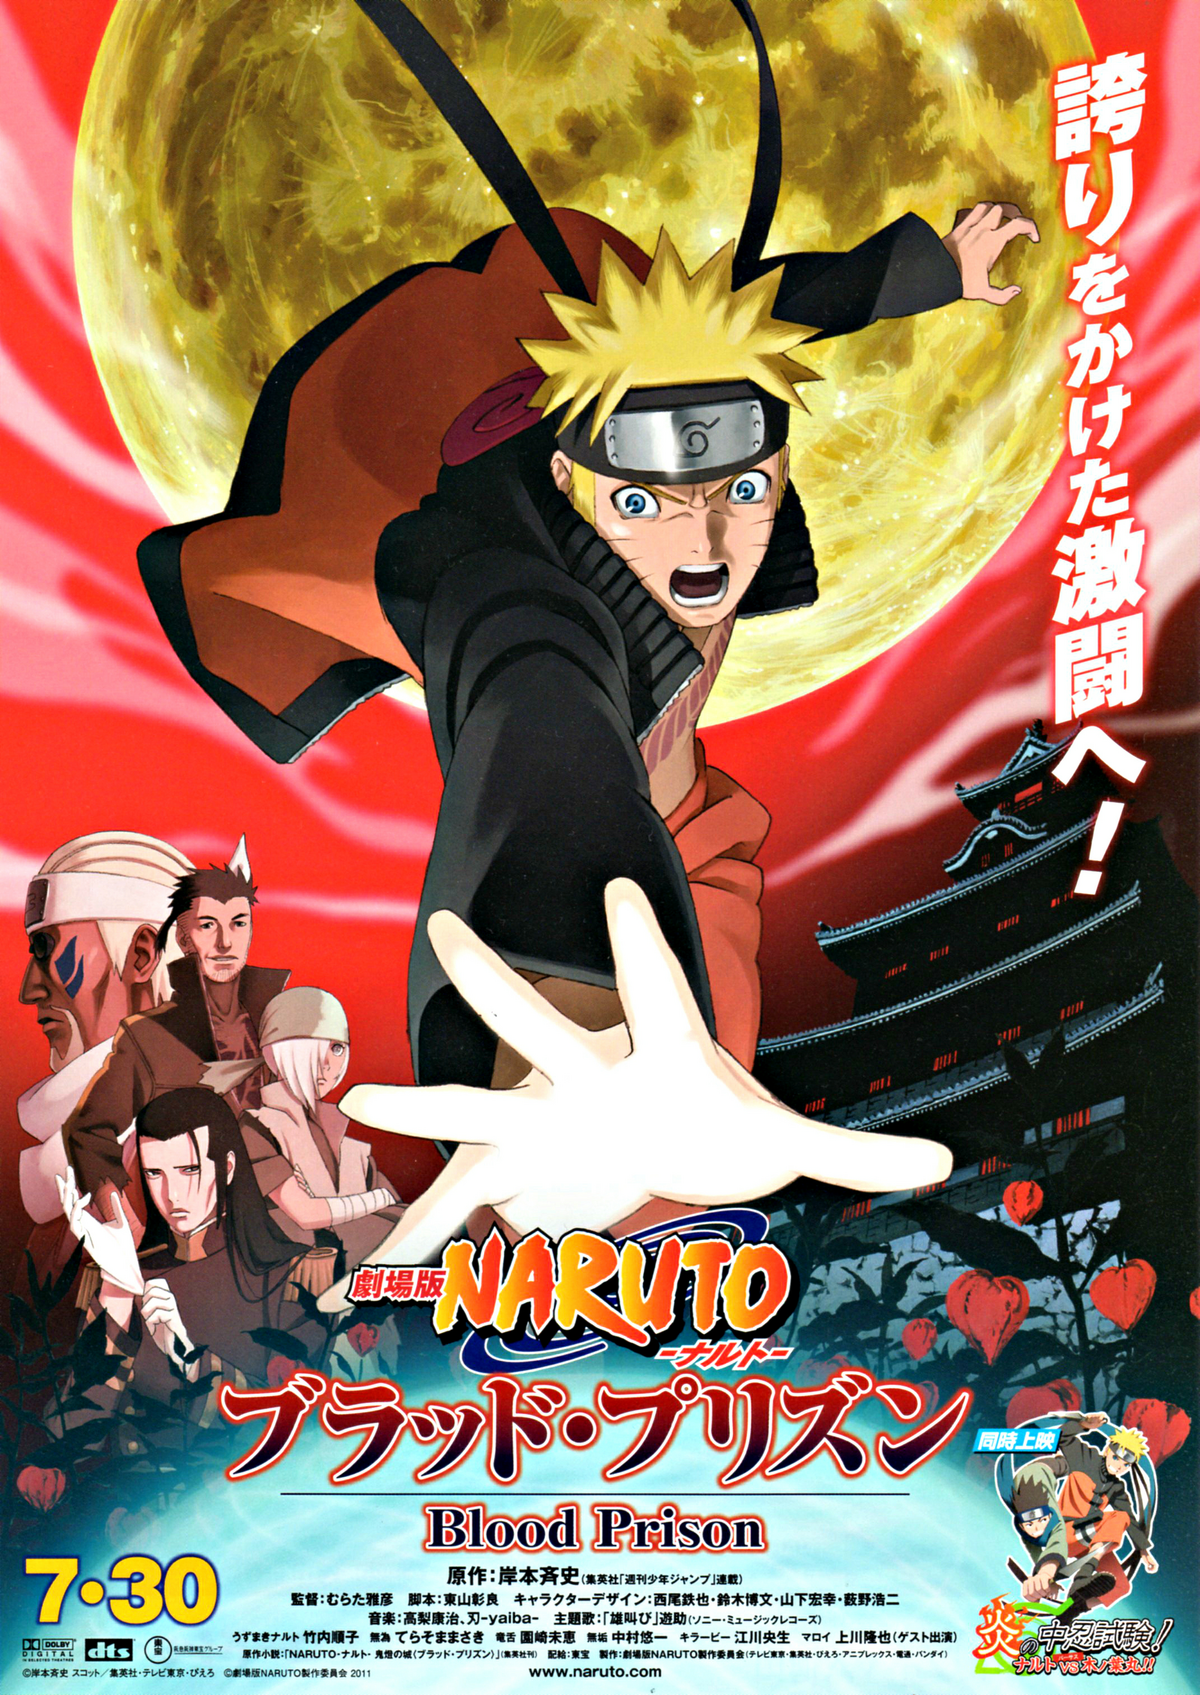 The Last: Naruto o Filme Dublado - Animes Online